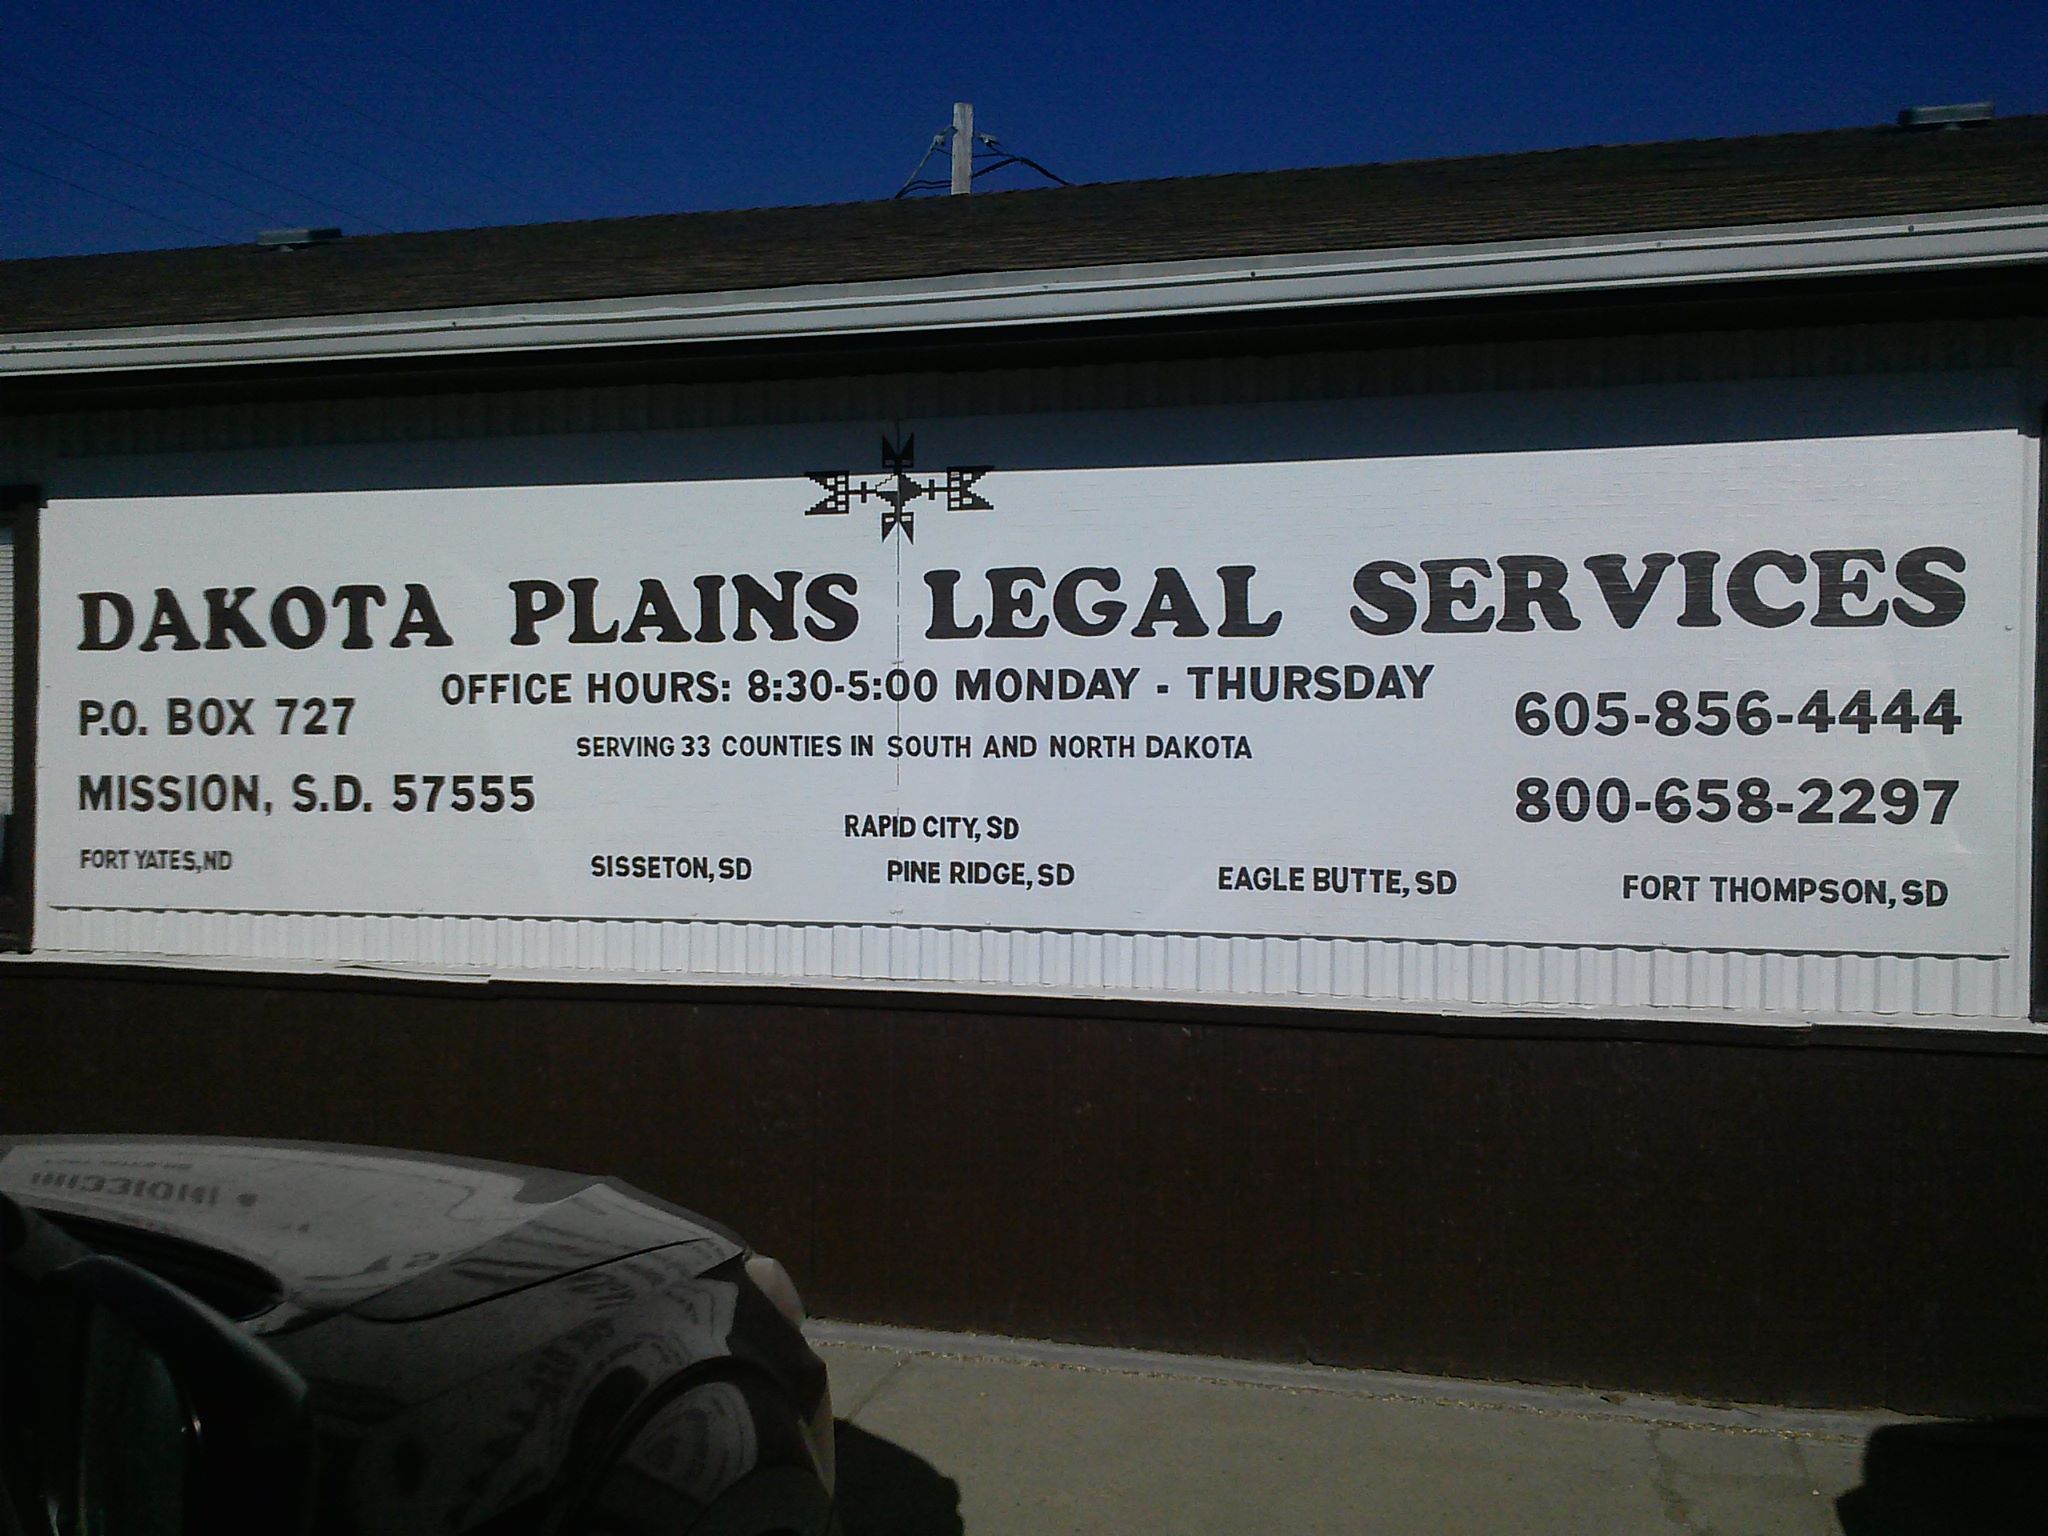 Dakota Plains Legal Services - Fort Thompson Office